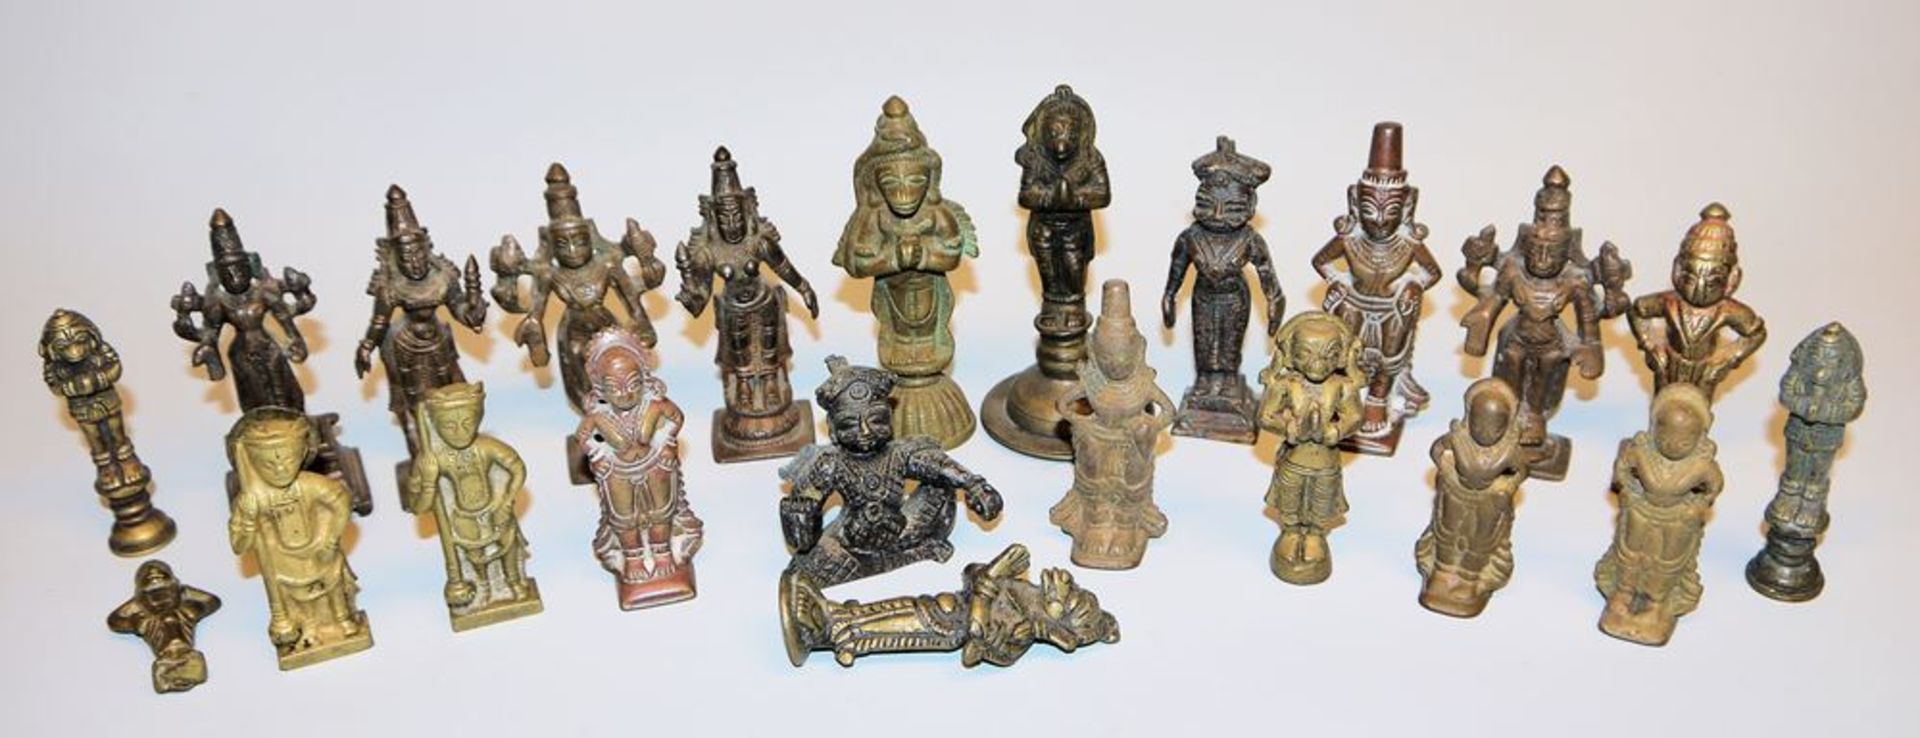 22 small bronzes of Hindu folk and high deities, India, 19th & 20th c.